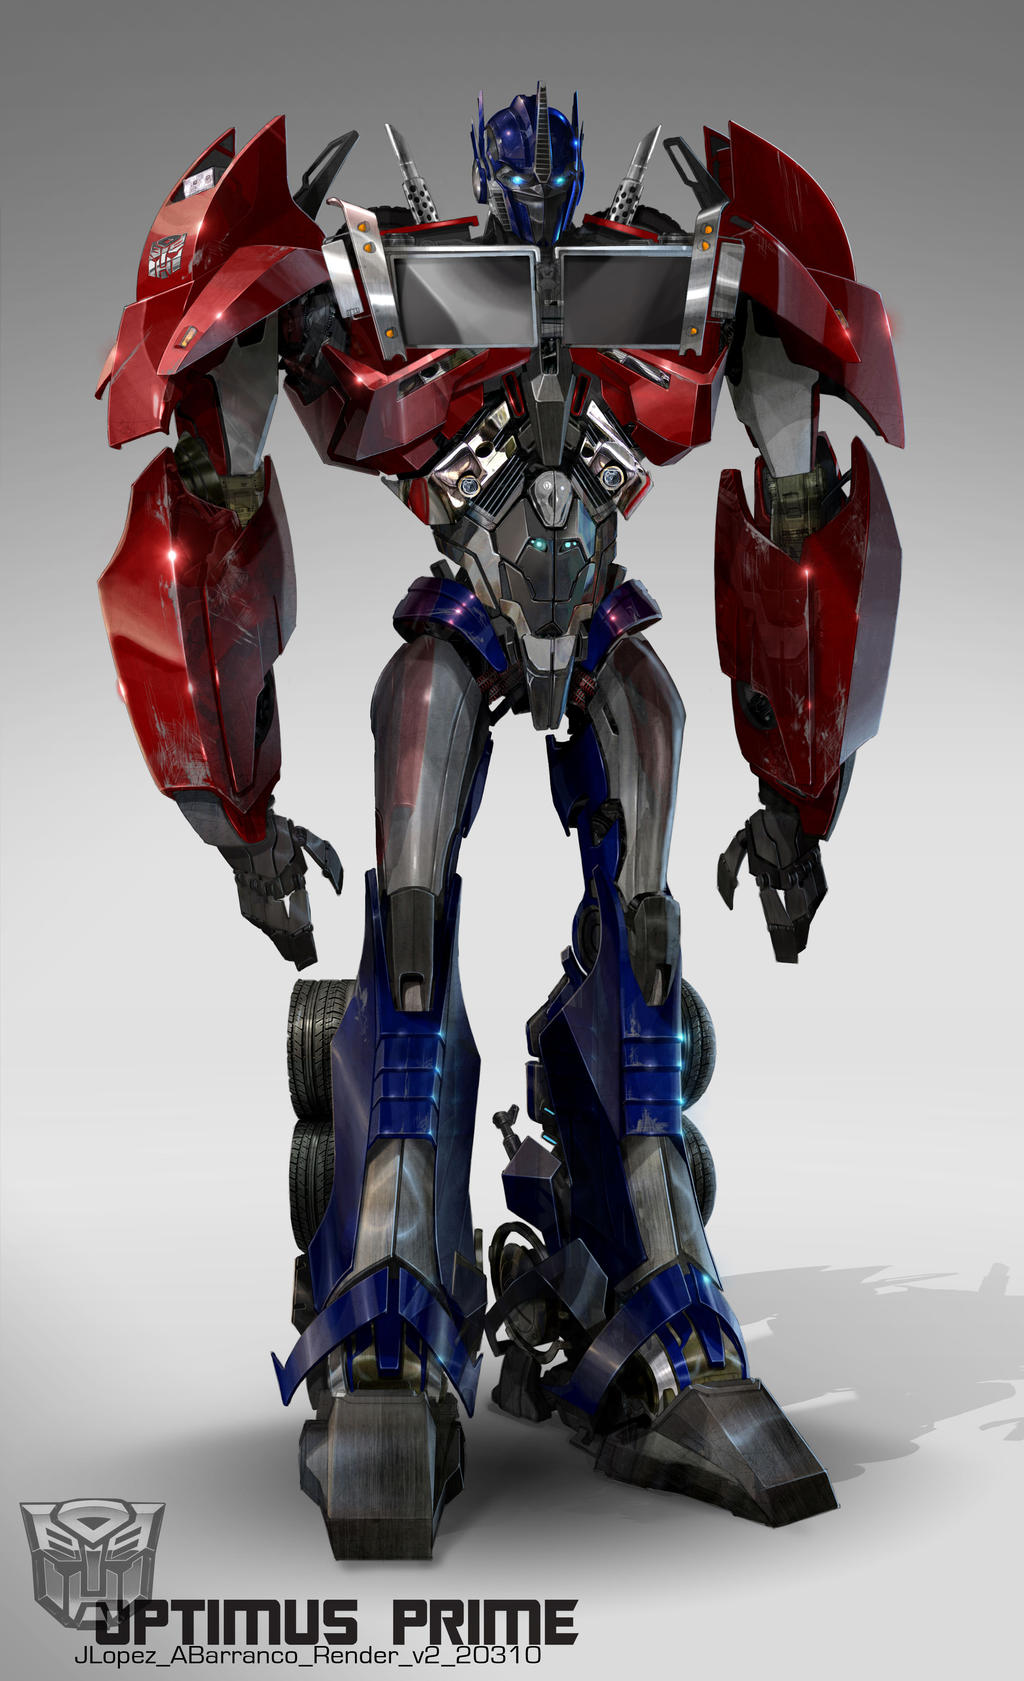 TF Optimus Prime design v2 by AugustoBarranco on DeviantArt